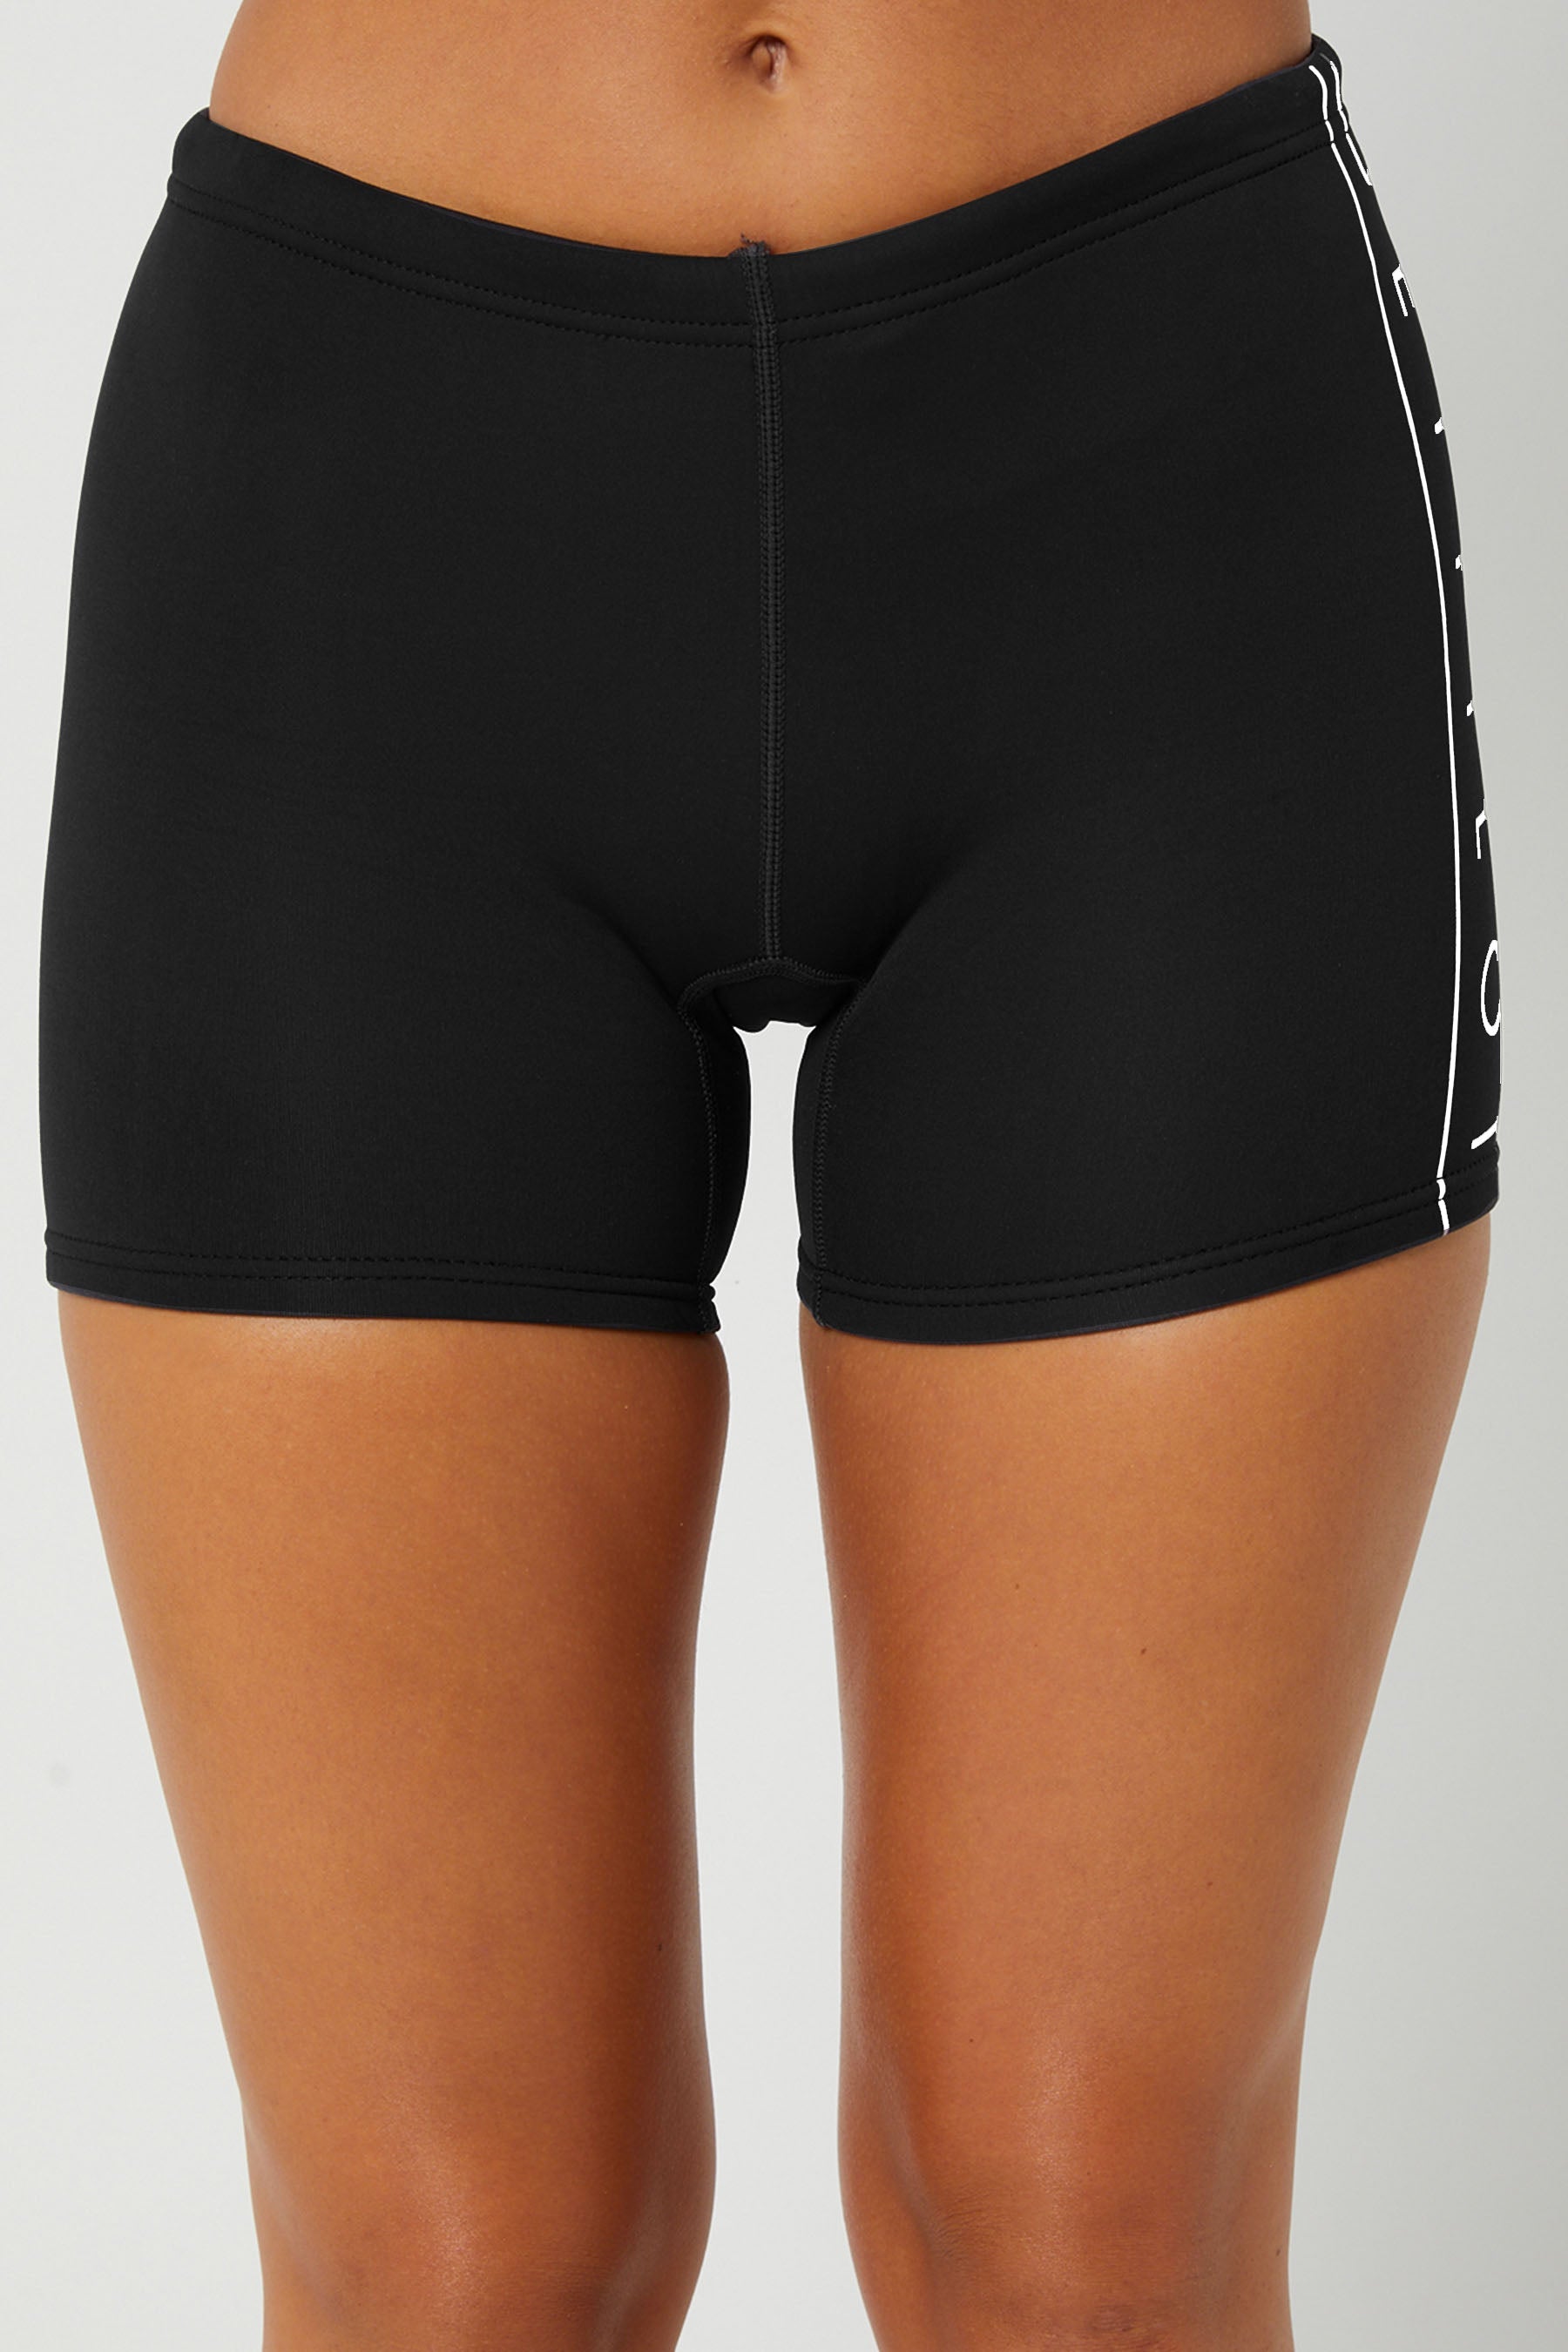 Ladies' Neoprene Shorts S / Black